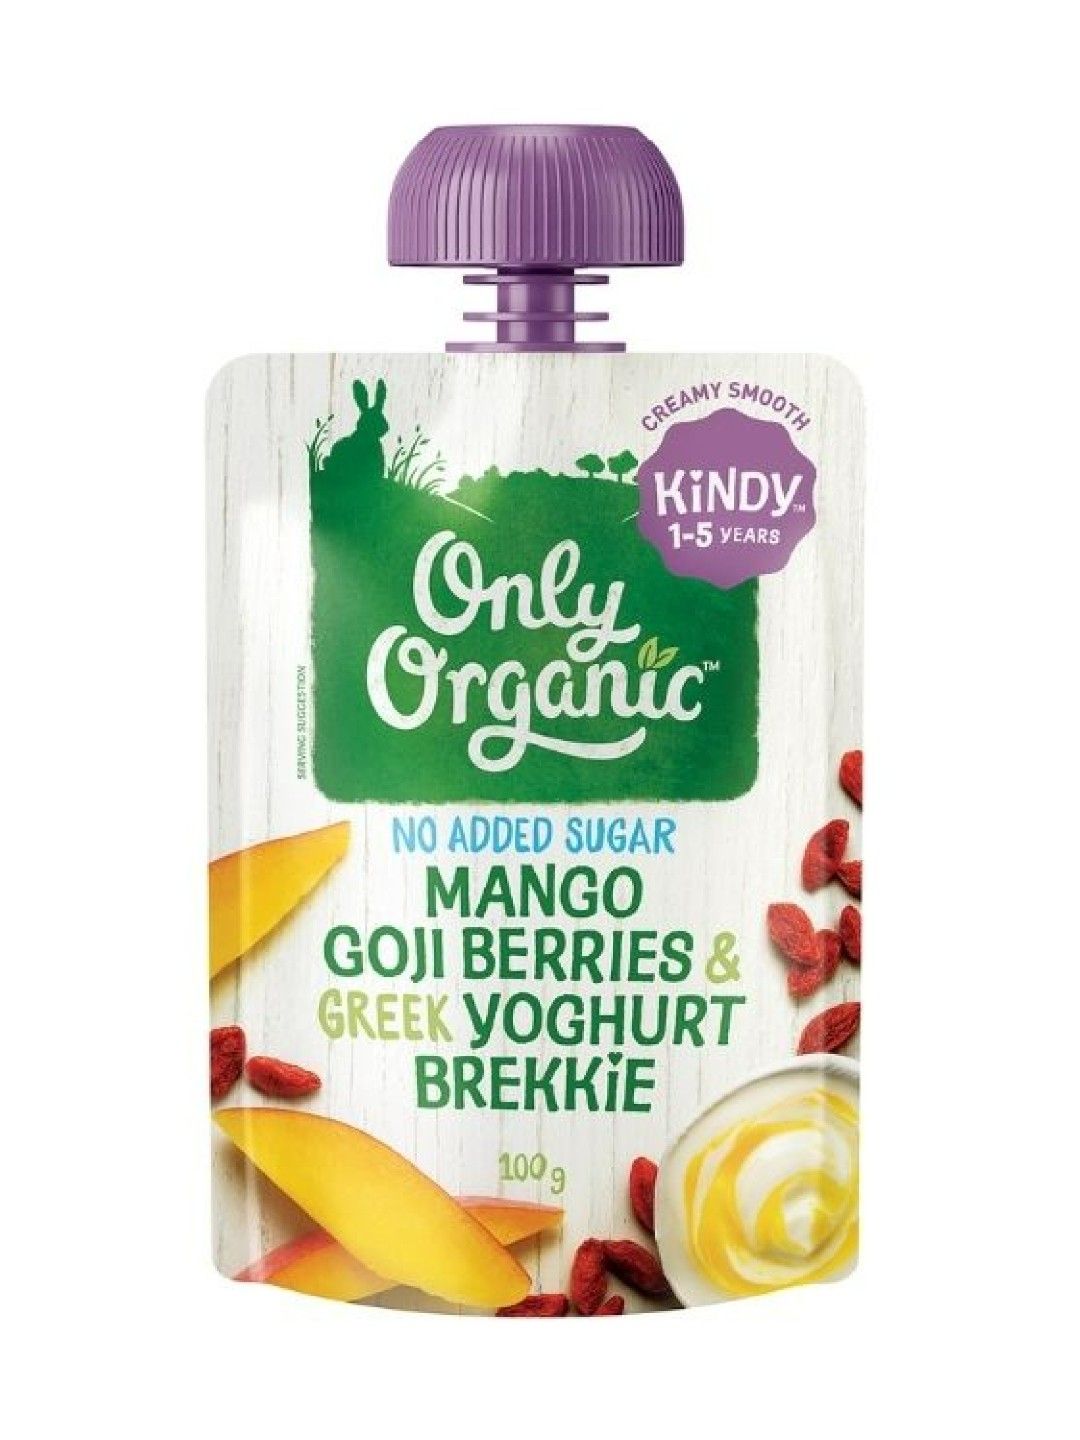 Only Organic Mango Goji Berries & Greek Yoghurt Brekkie (100g)